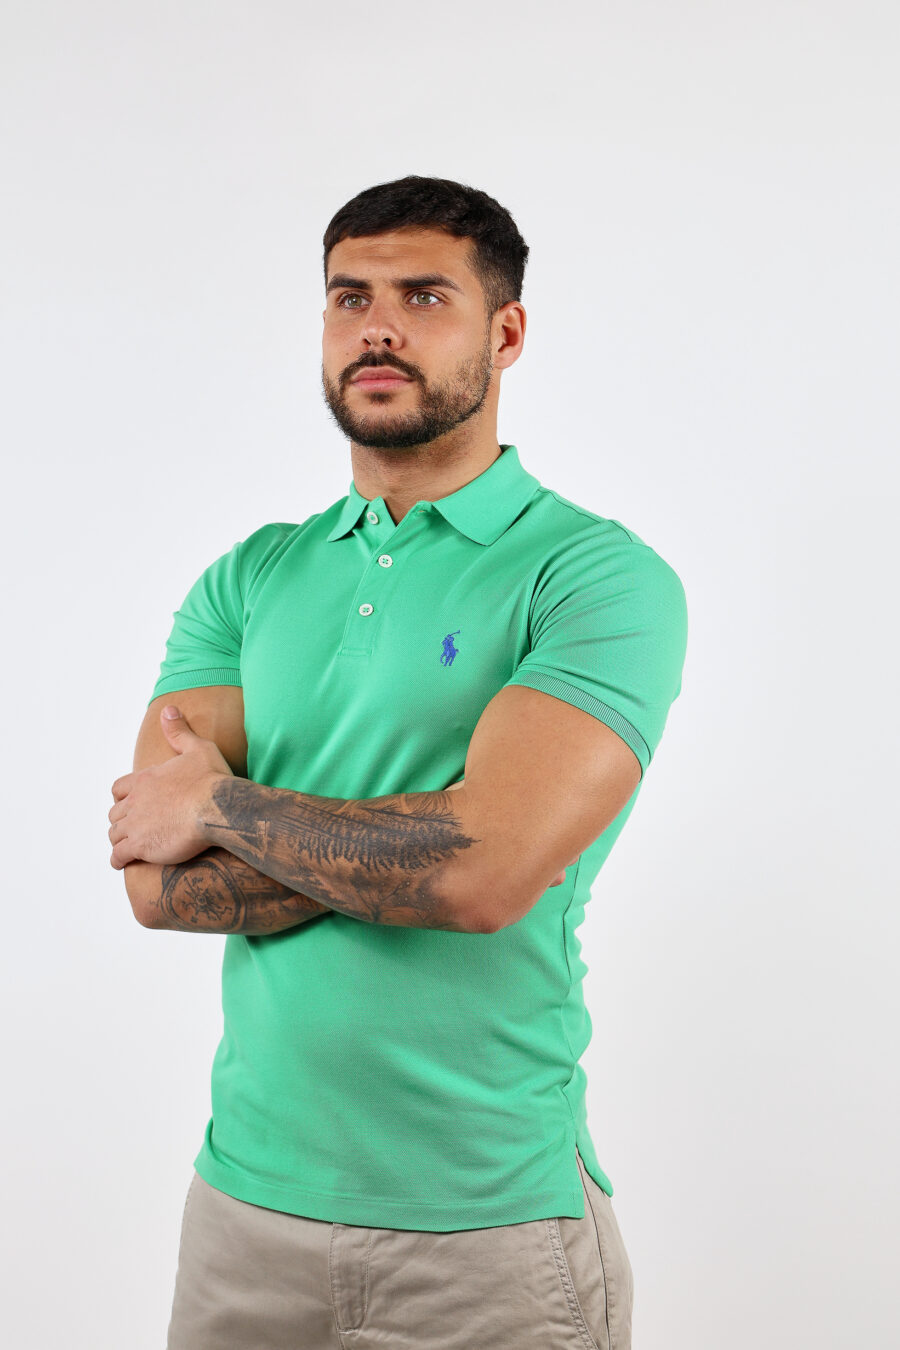 Camiseta verde y azul con minilogo "polo" - BLS Fashion 172